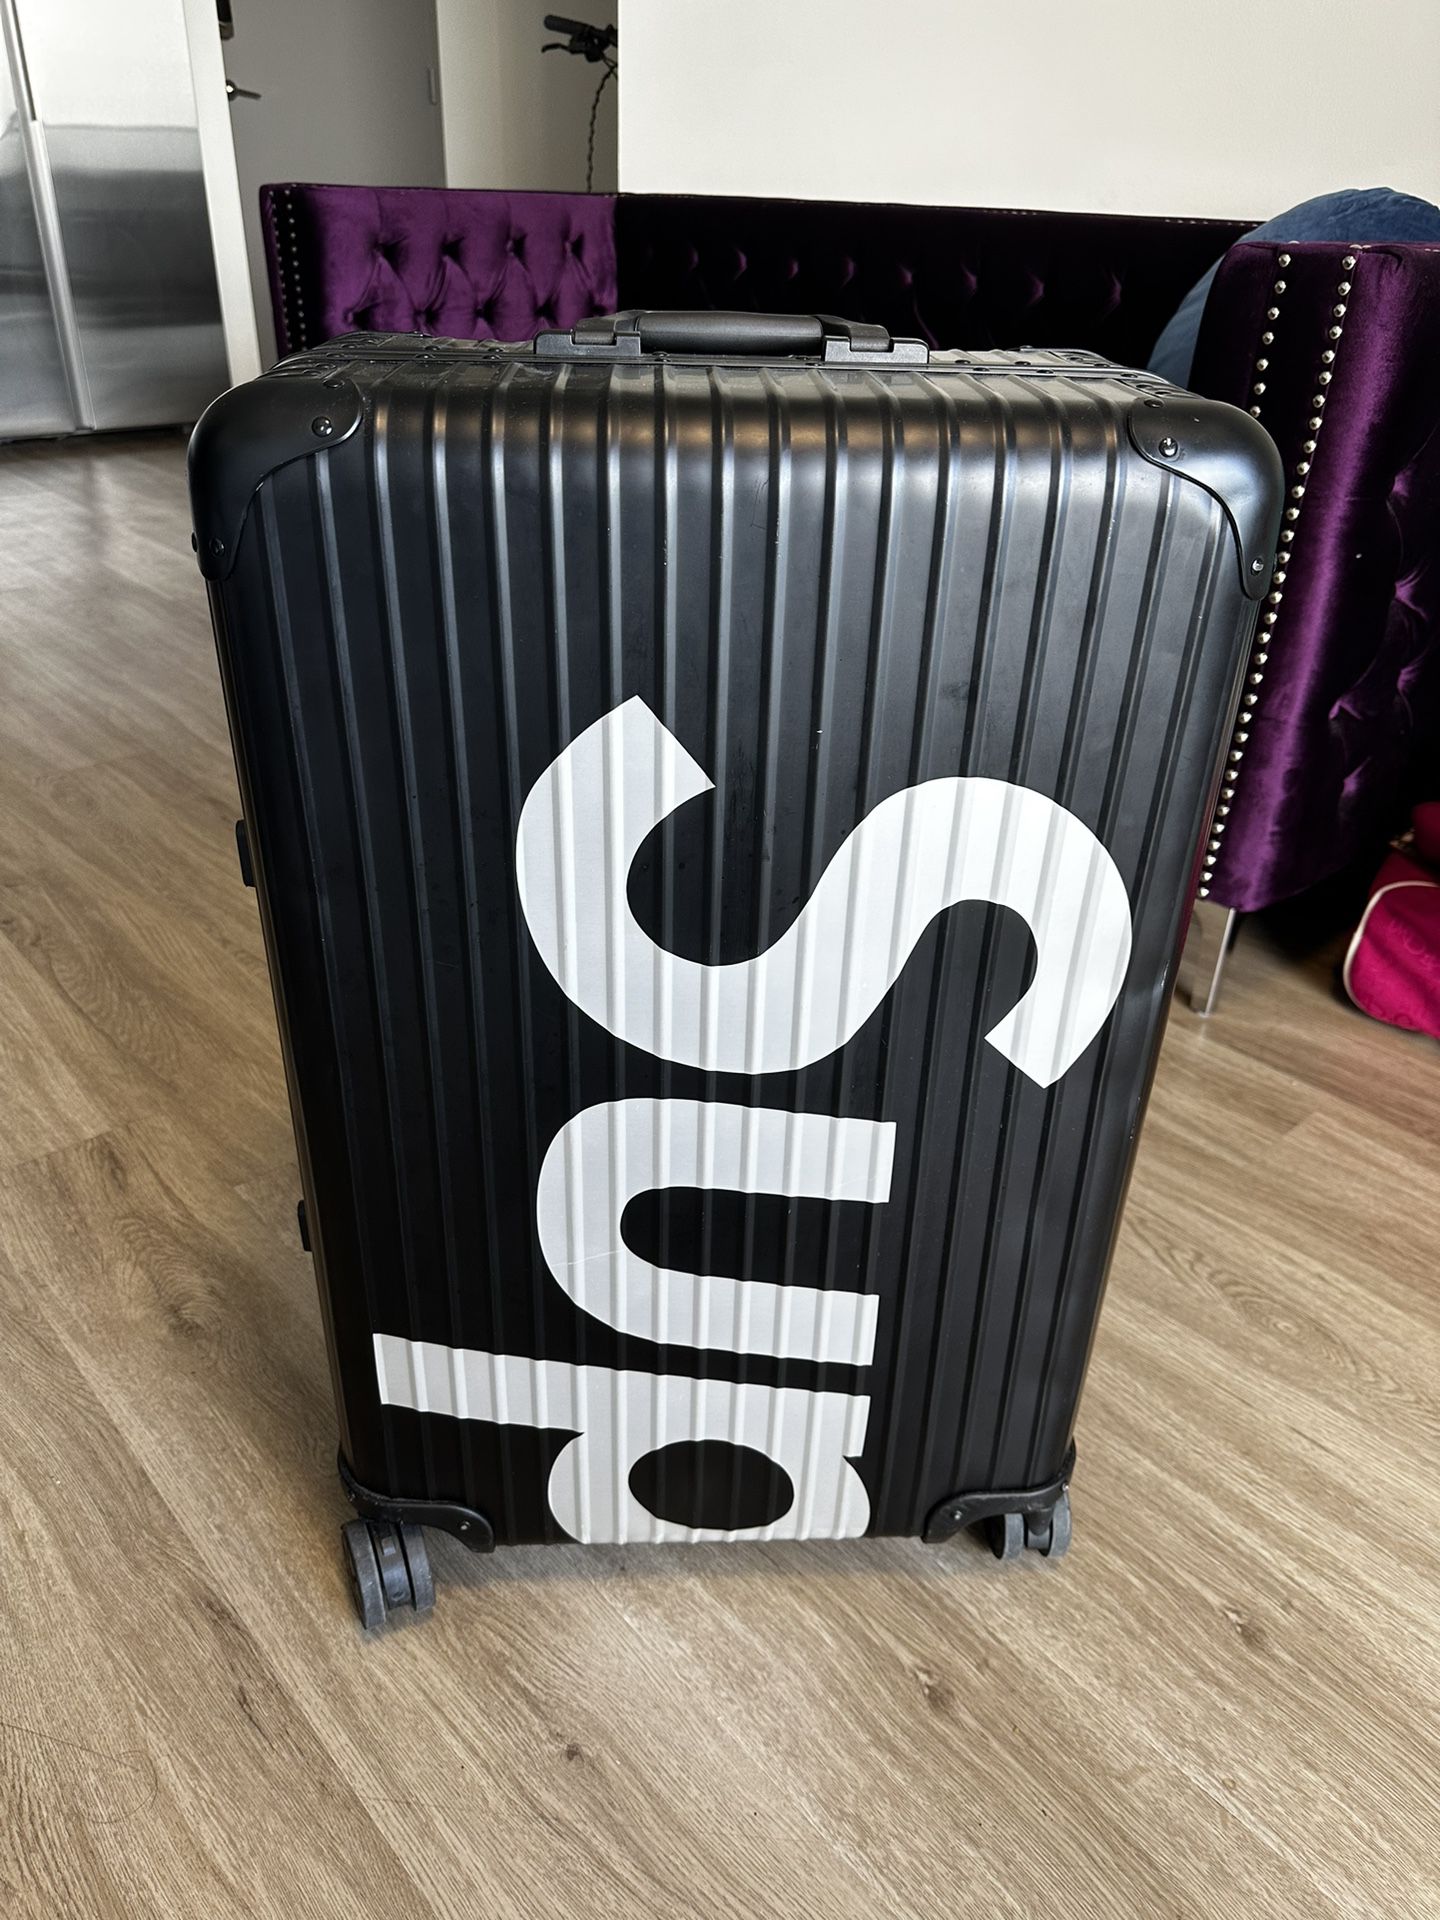 rimowa supreme suitcase - OFF-66% > Shipping free